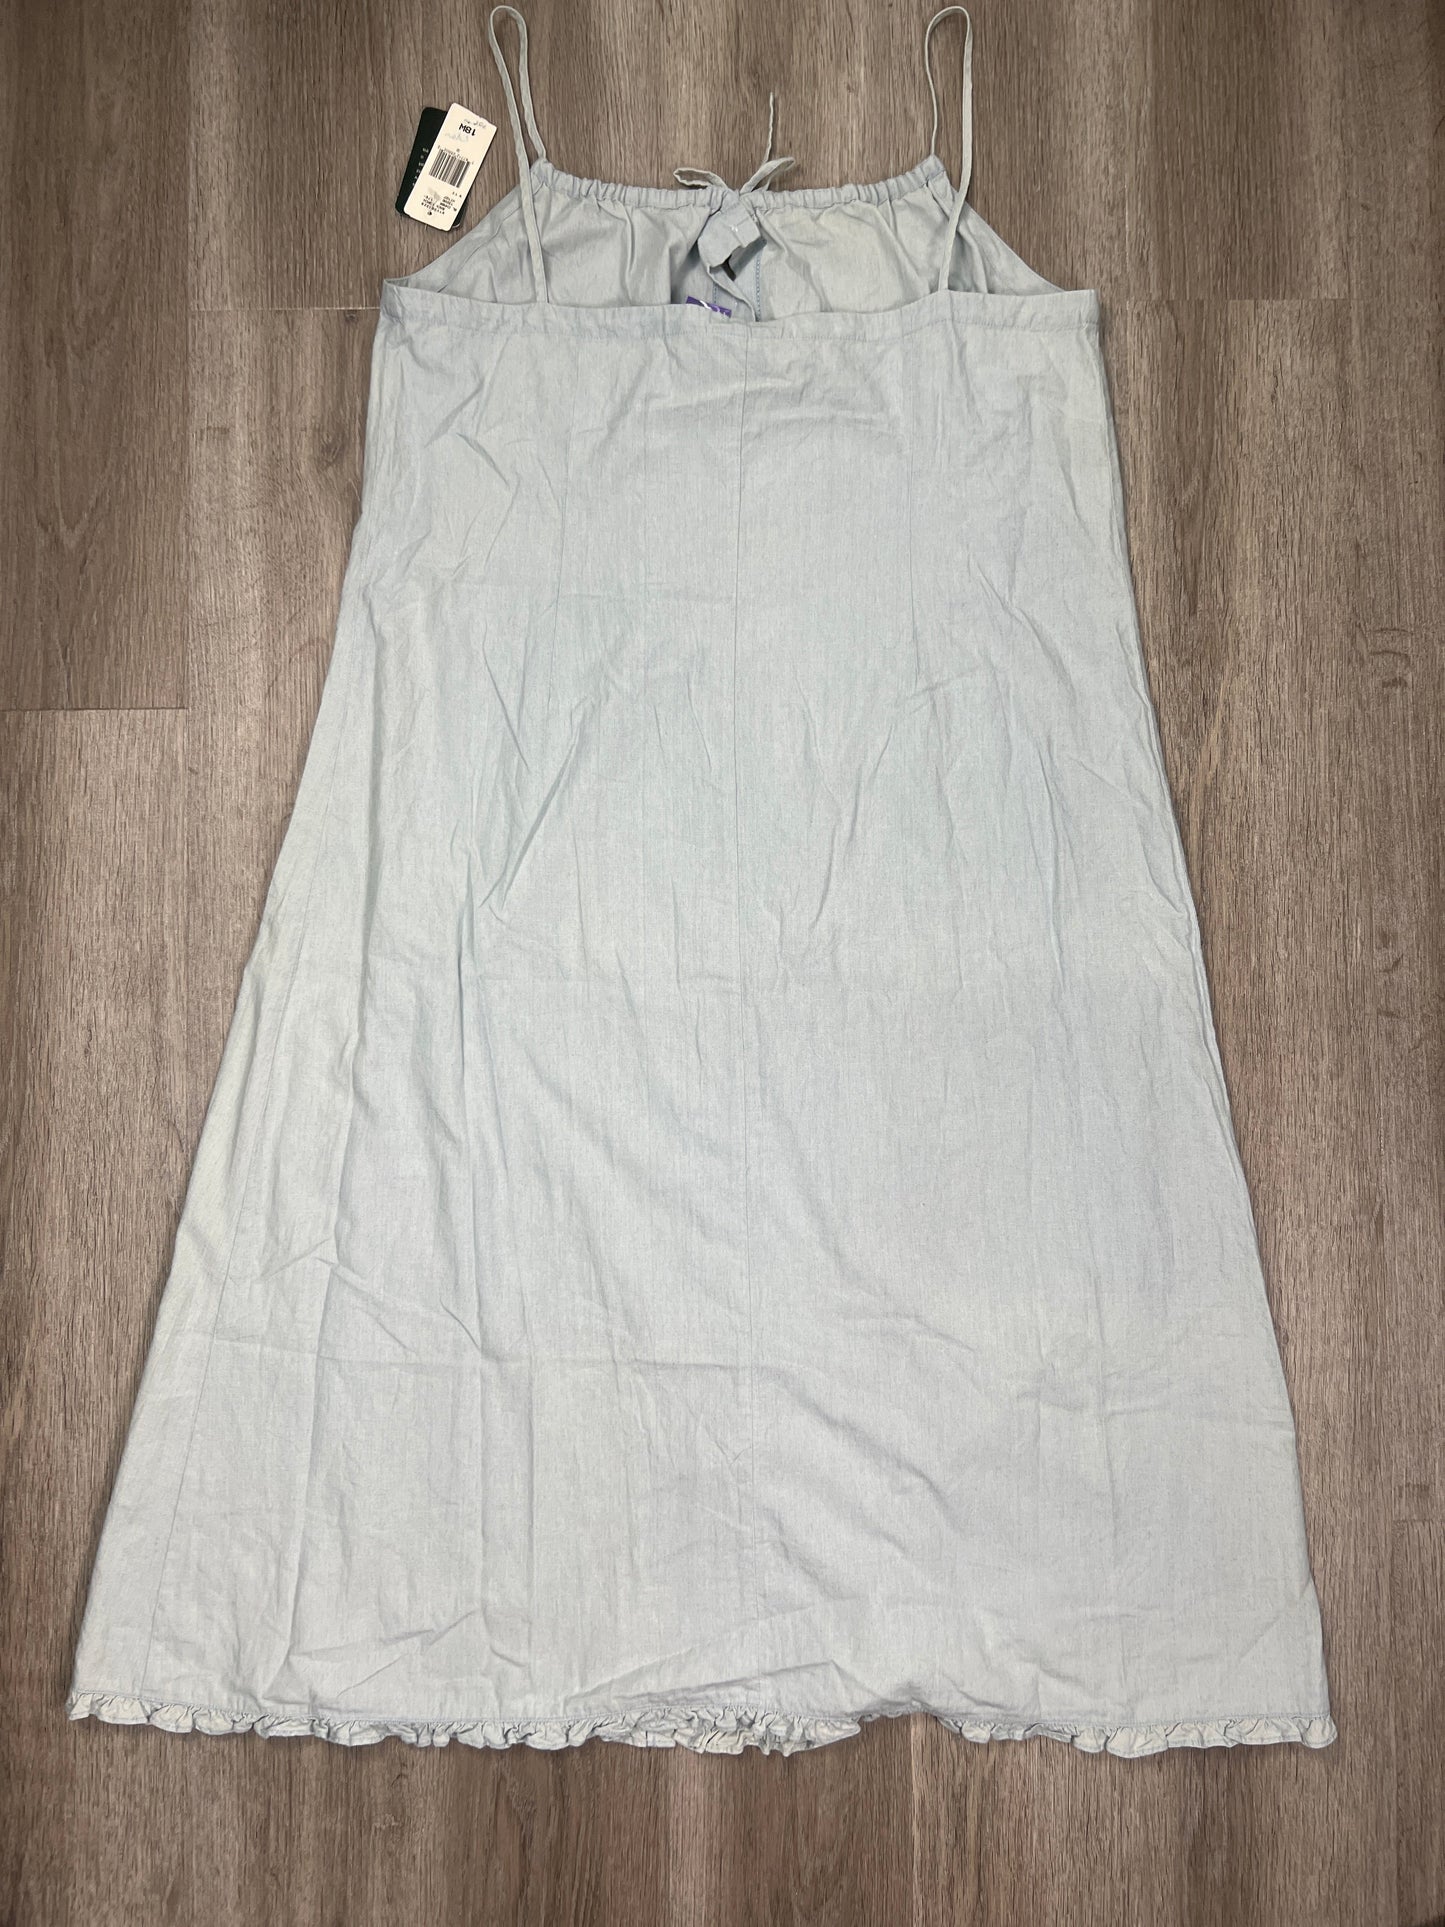 Dress Casual Midi By Lauren By Ralph Lauren  Size: 2x